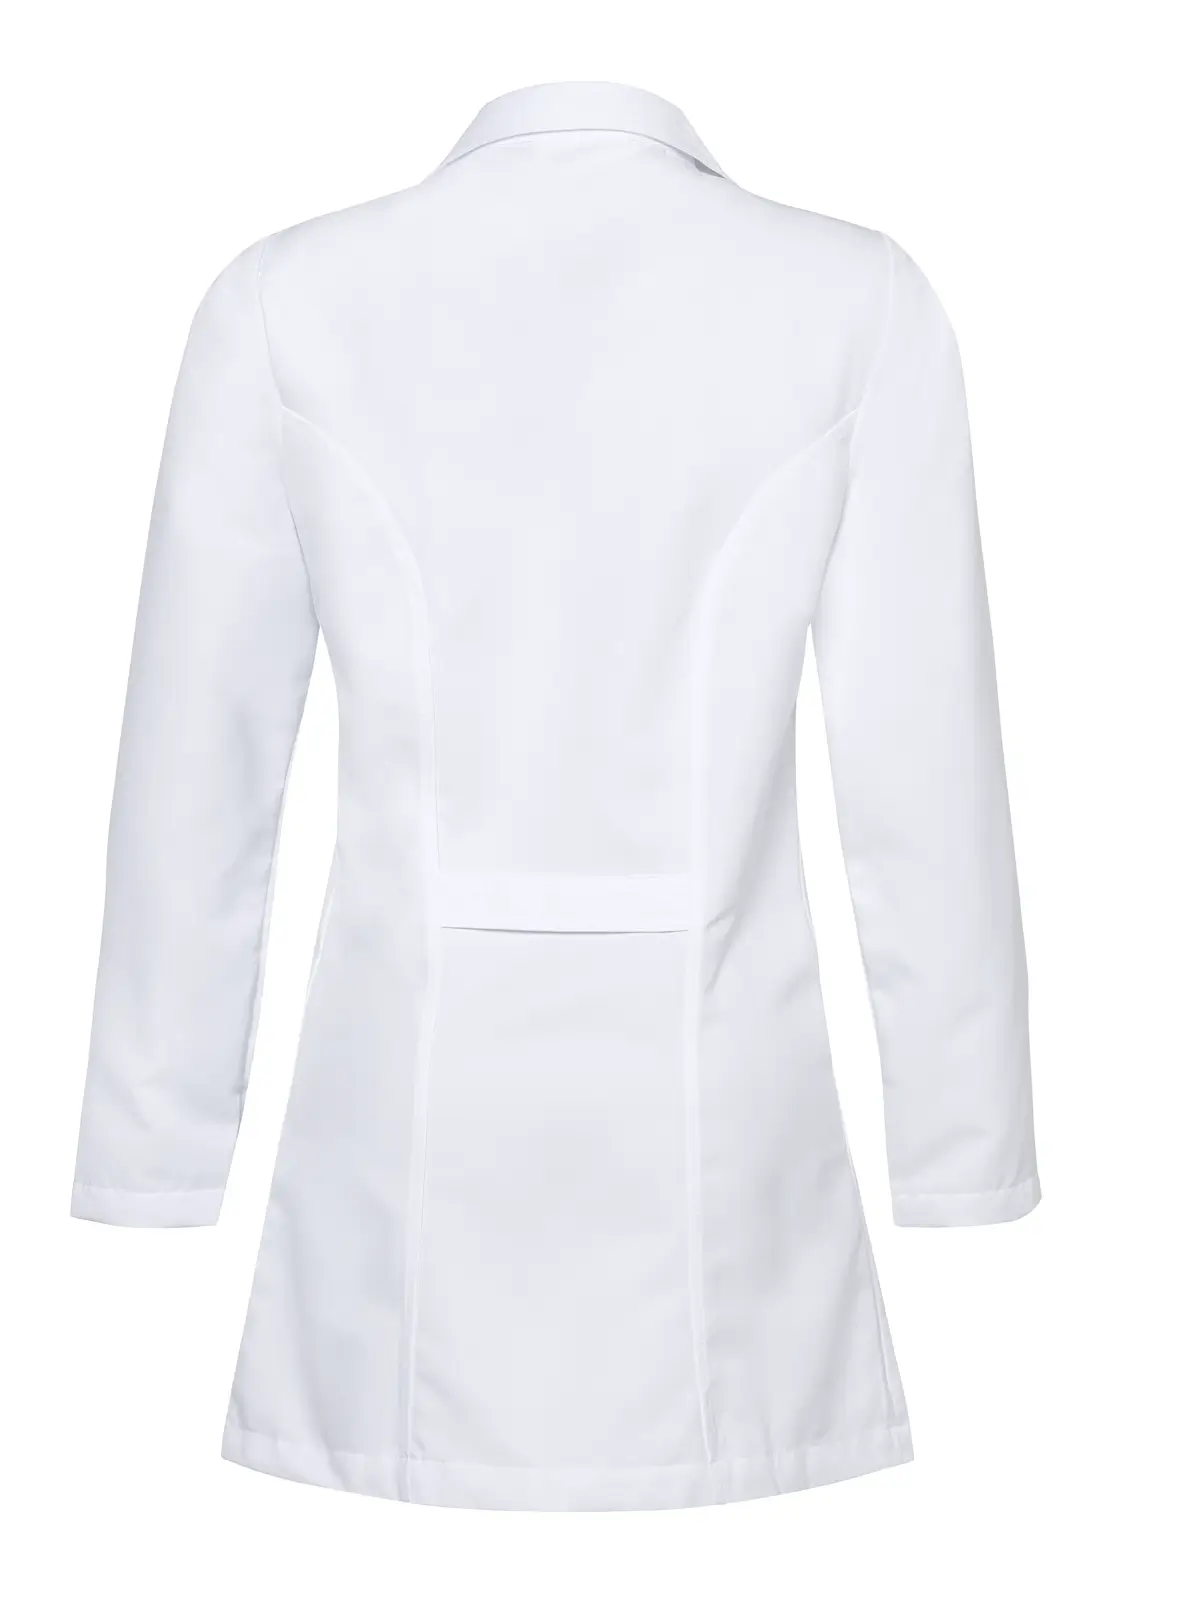 White medical gown for men